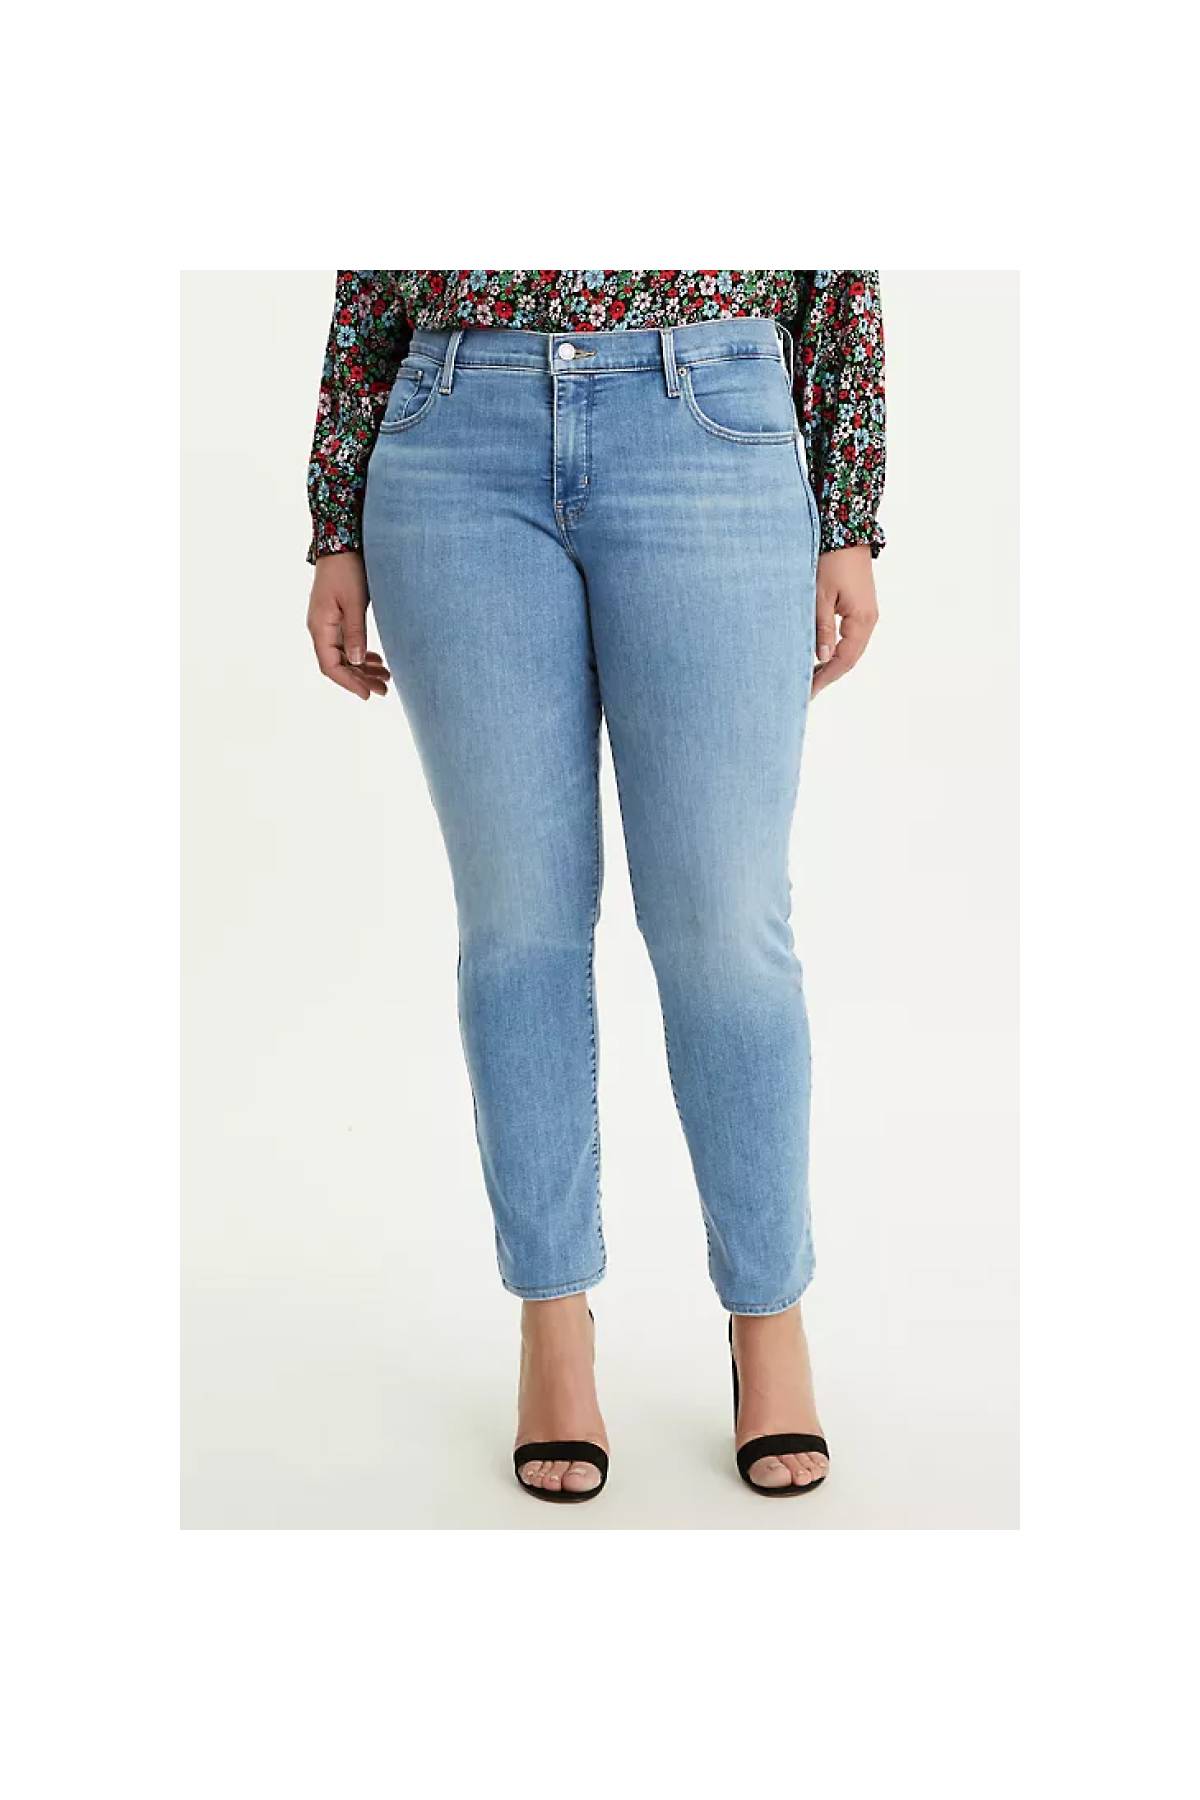 Model wearing 311 shaping skinny jeans